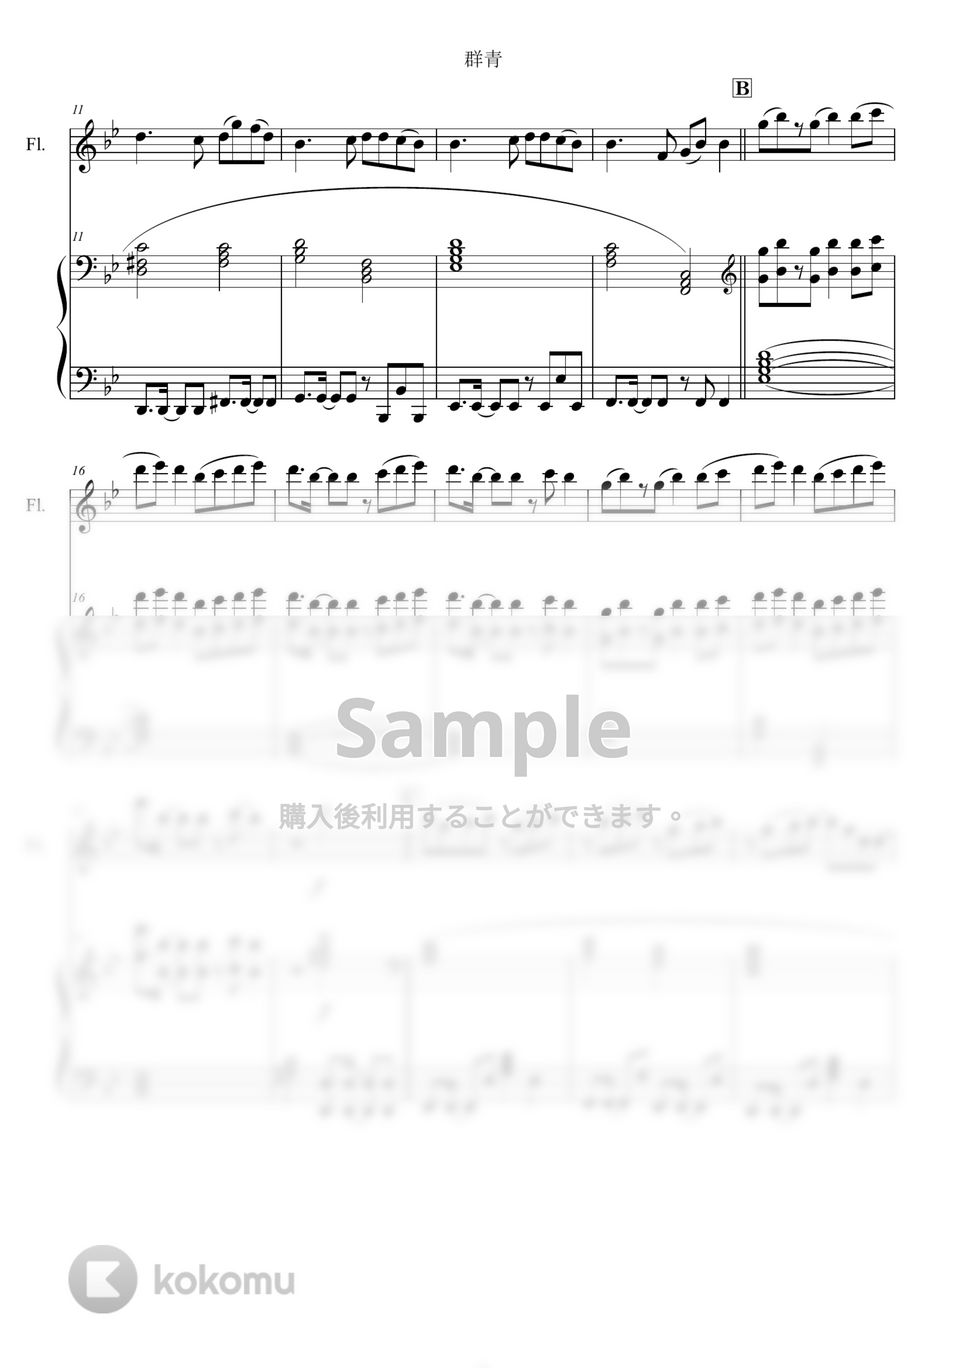 YOASOBI - 群青 (ピアノ伴奏) by Shiroko